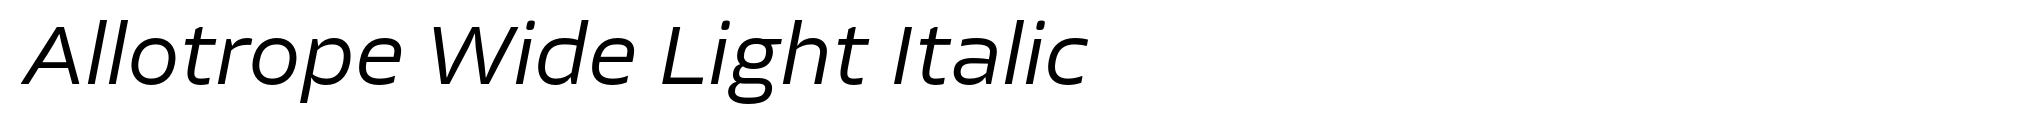 Allotrope Wide Light Italic image